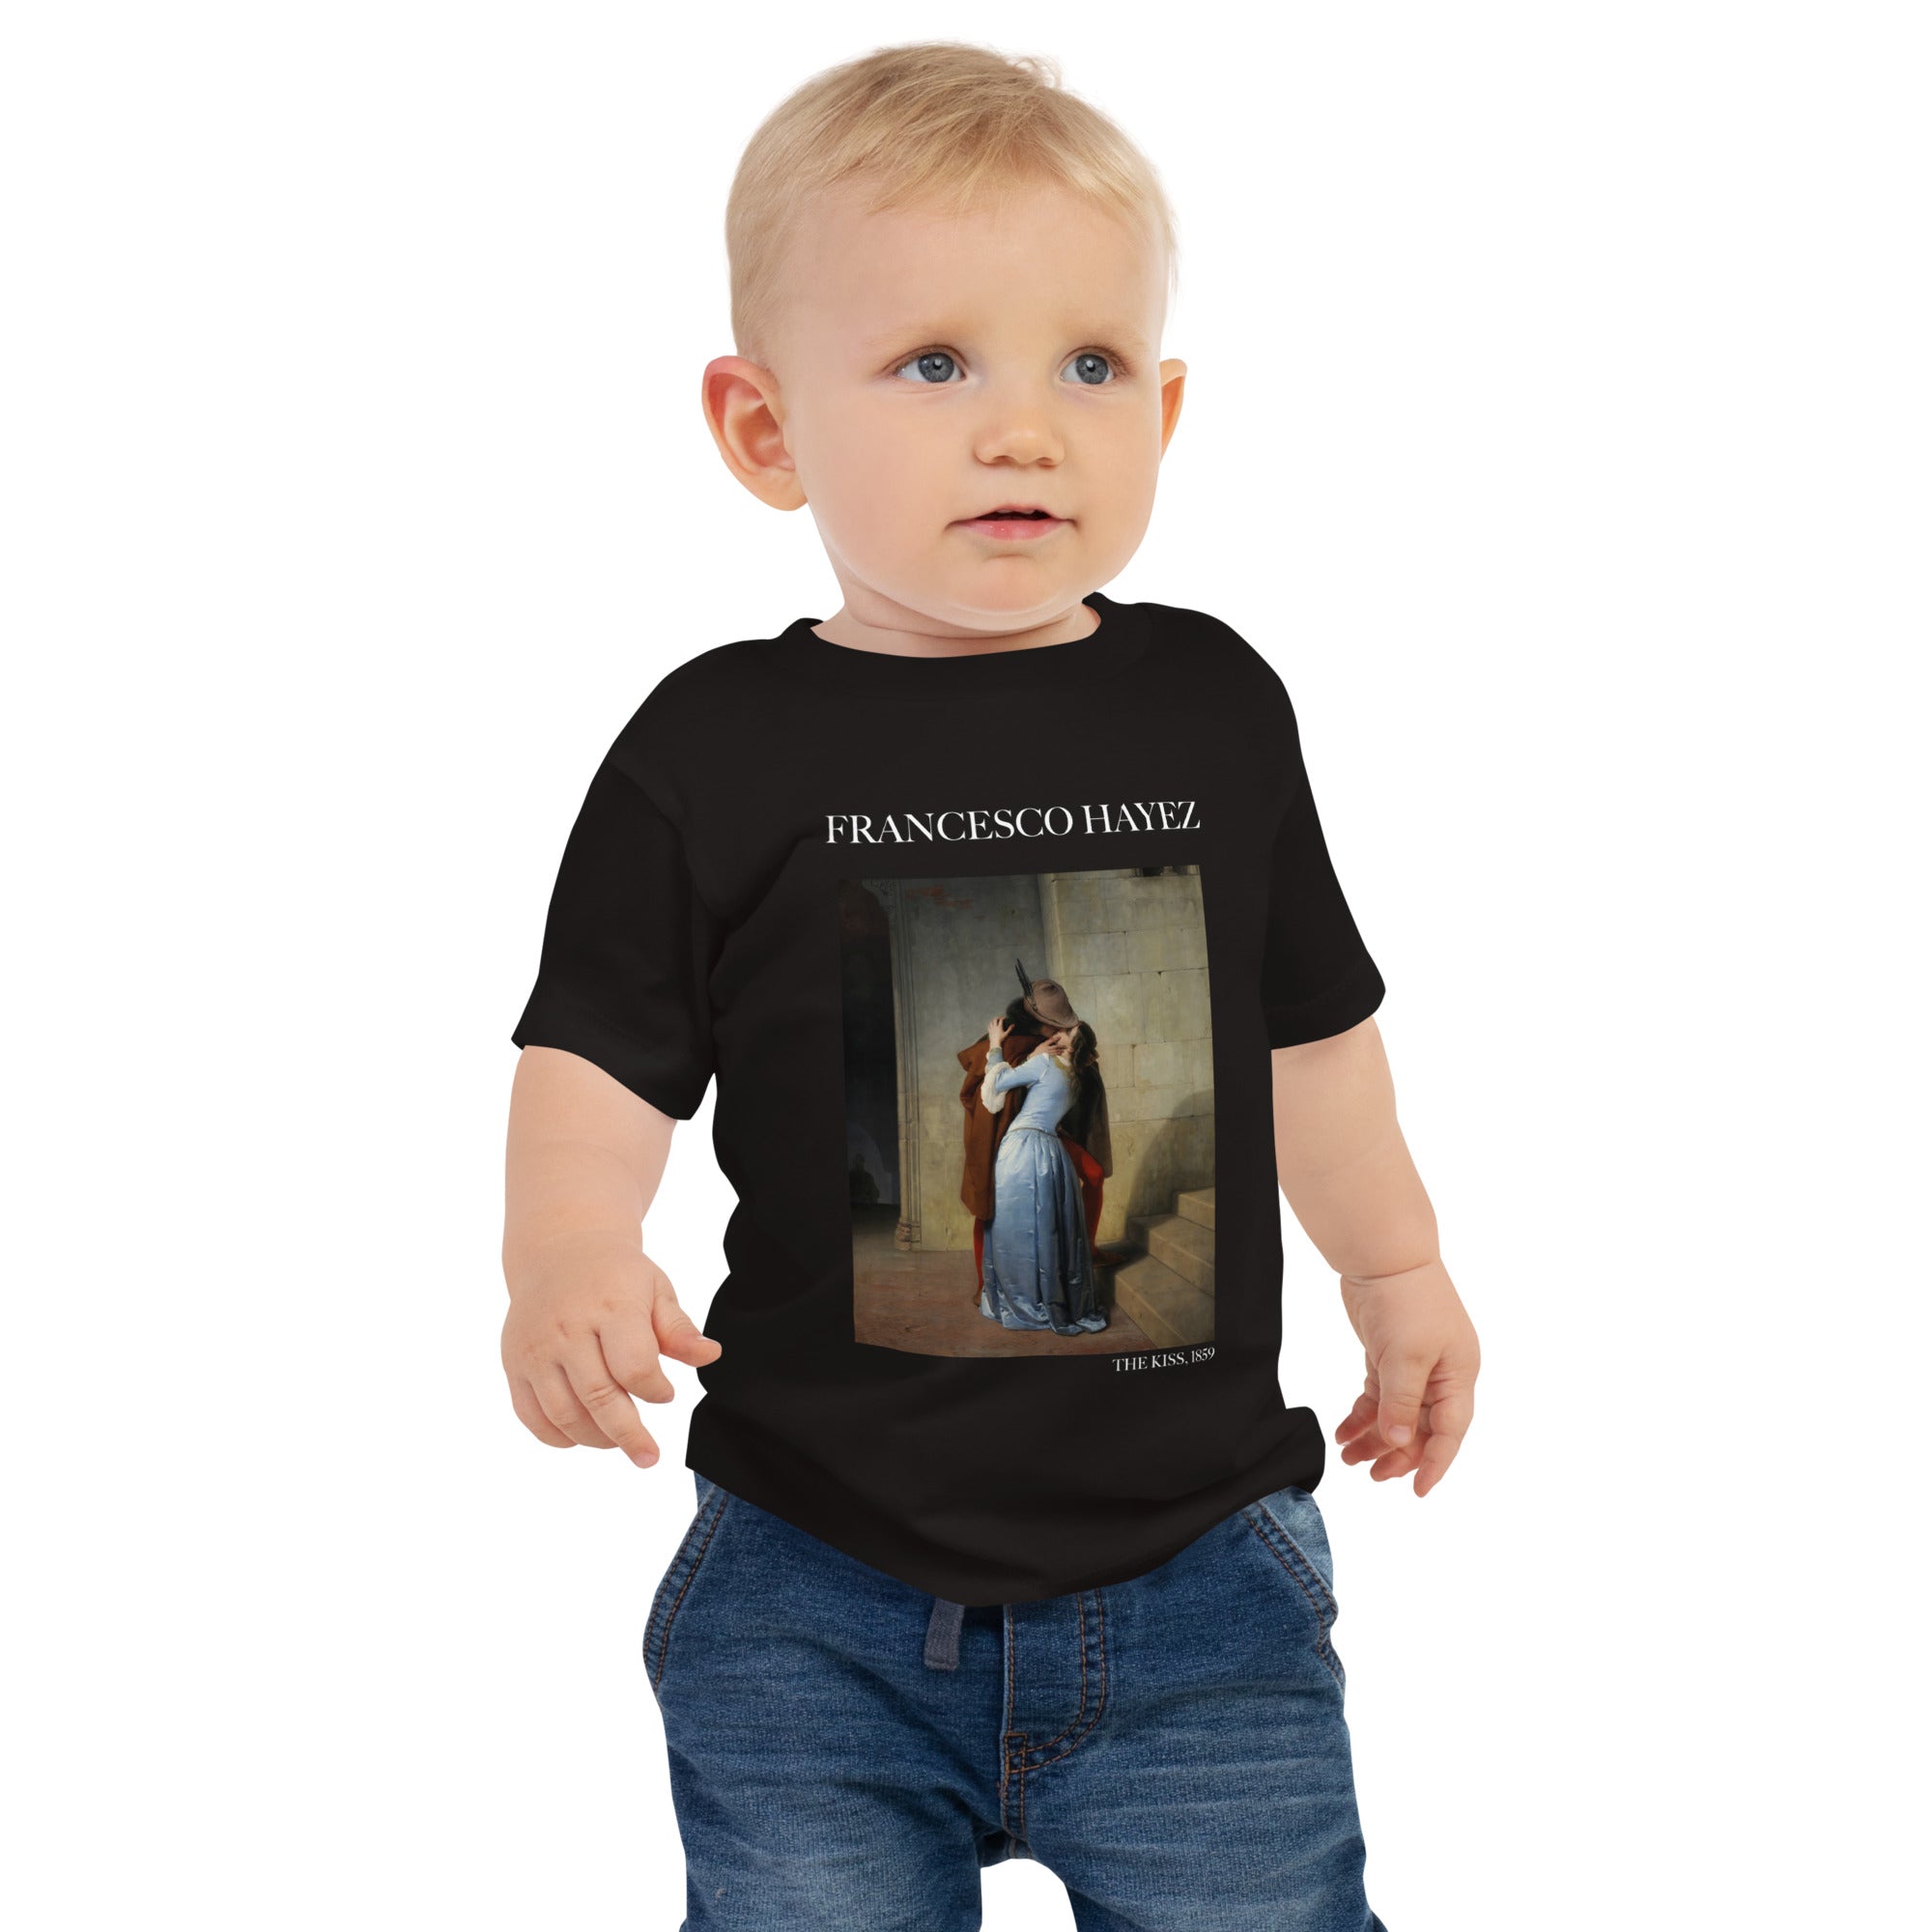 Francesco Hayez 'The Kiss' Famous Painting Baby Staple T-Shirt | Premium Baby Art Tee